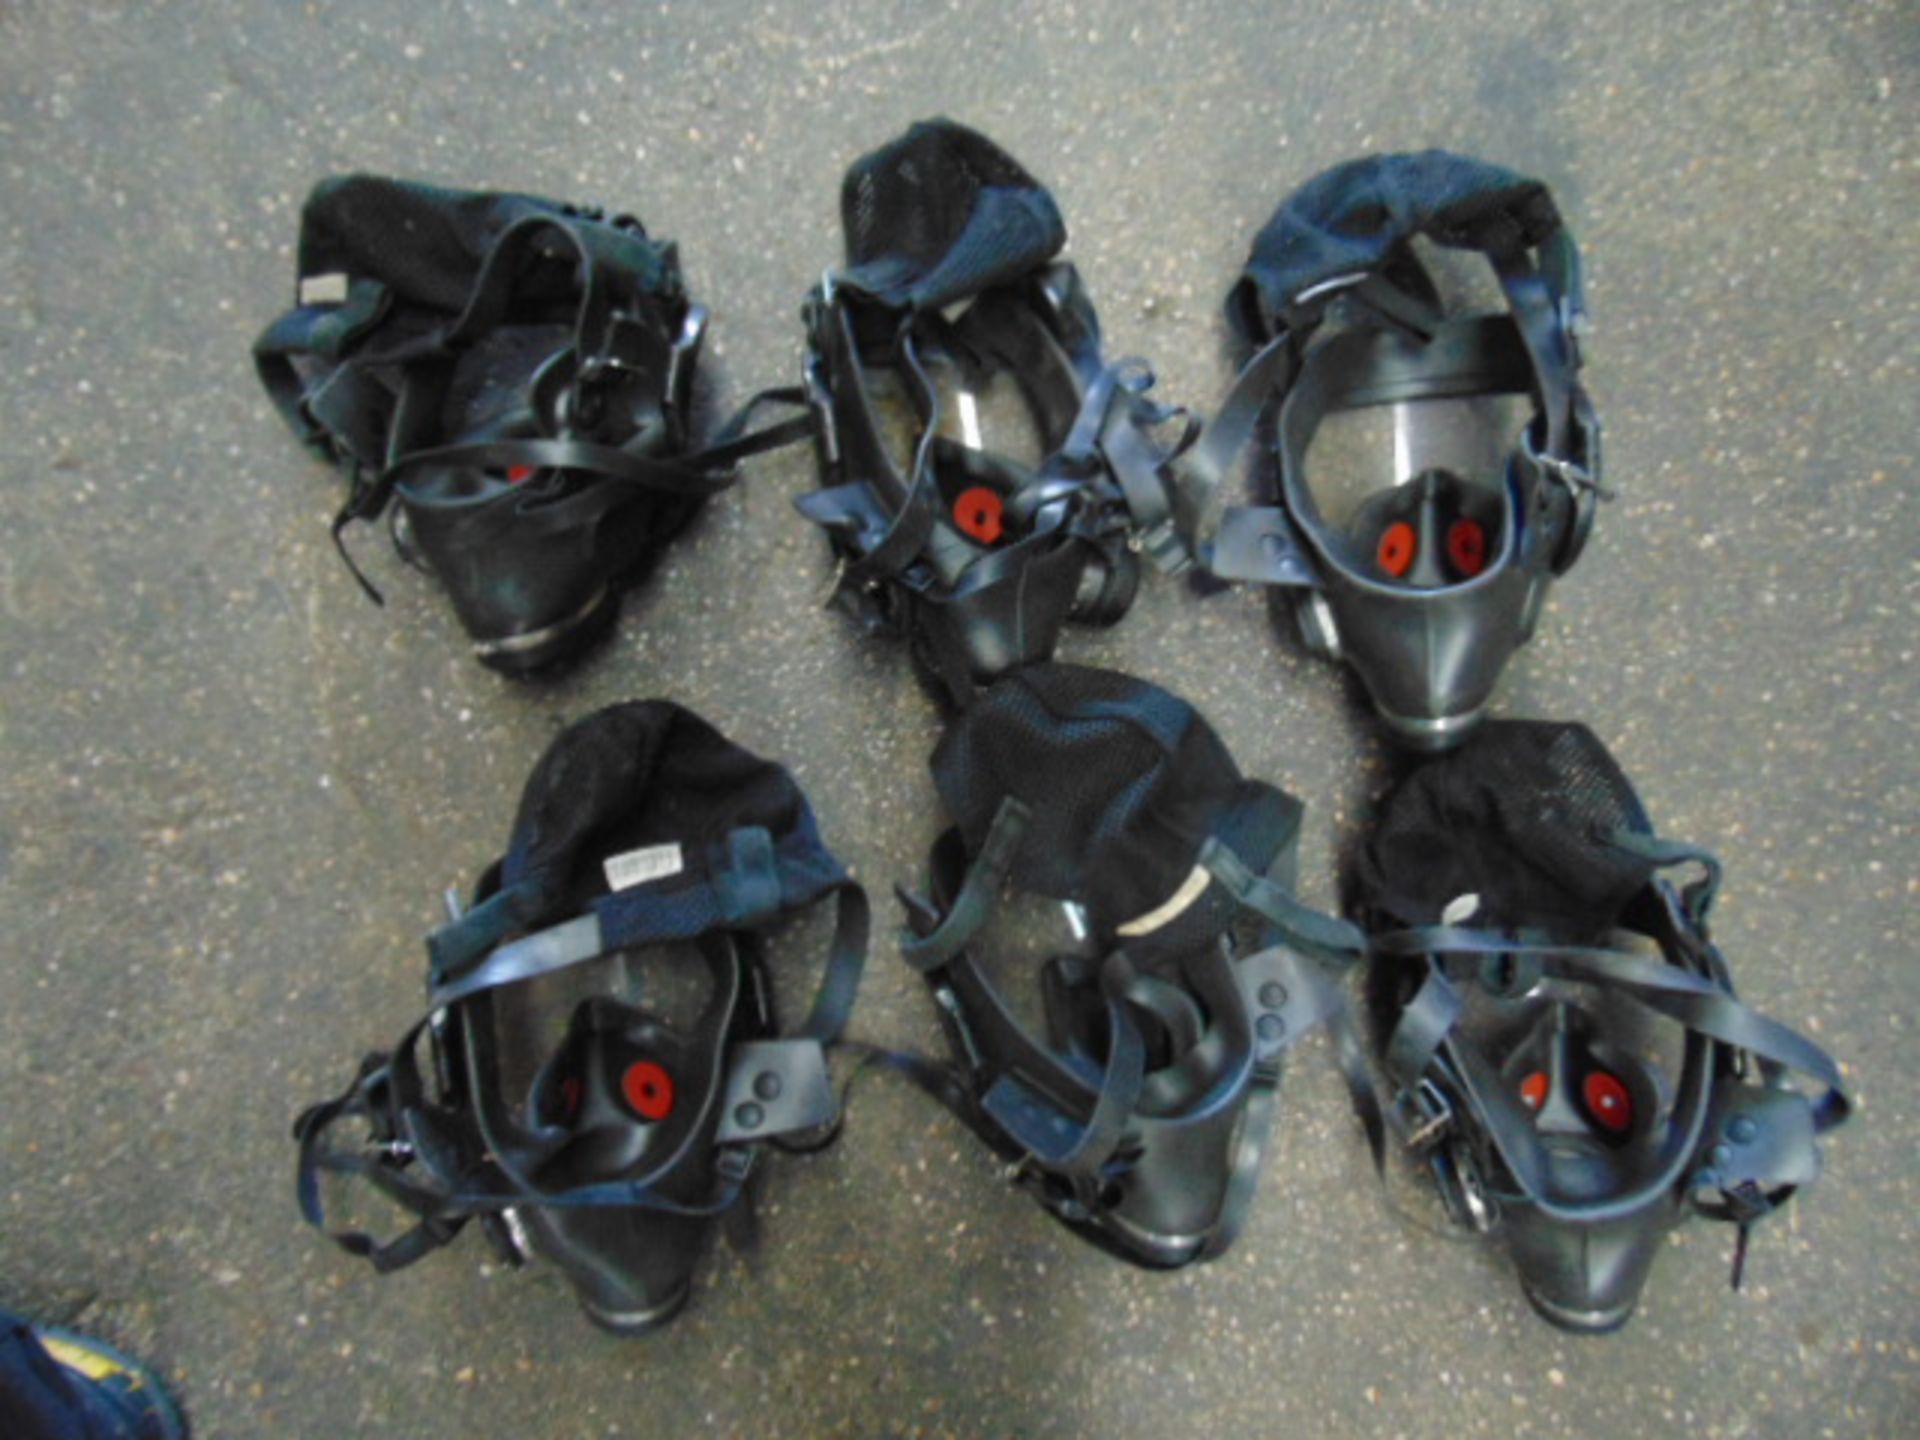 6 x Breathing Apparatus Masks - Image 4 of 4